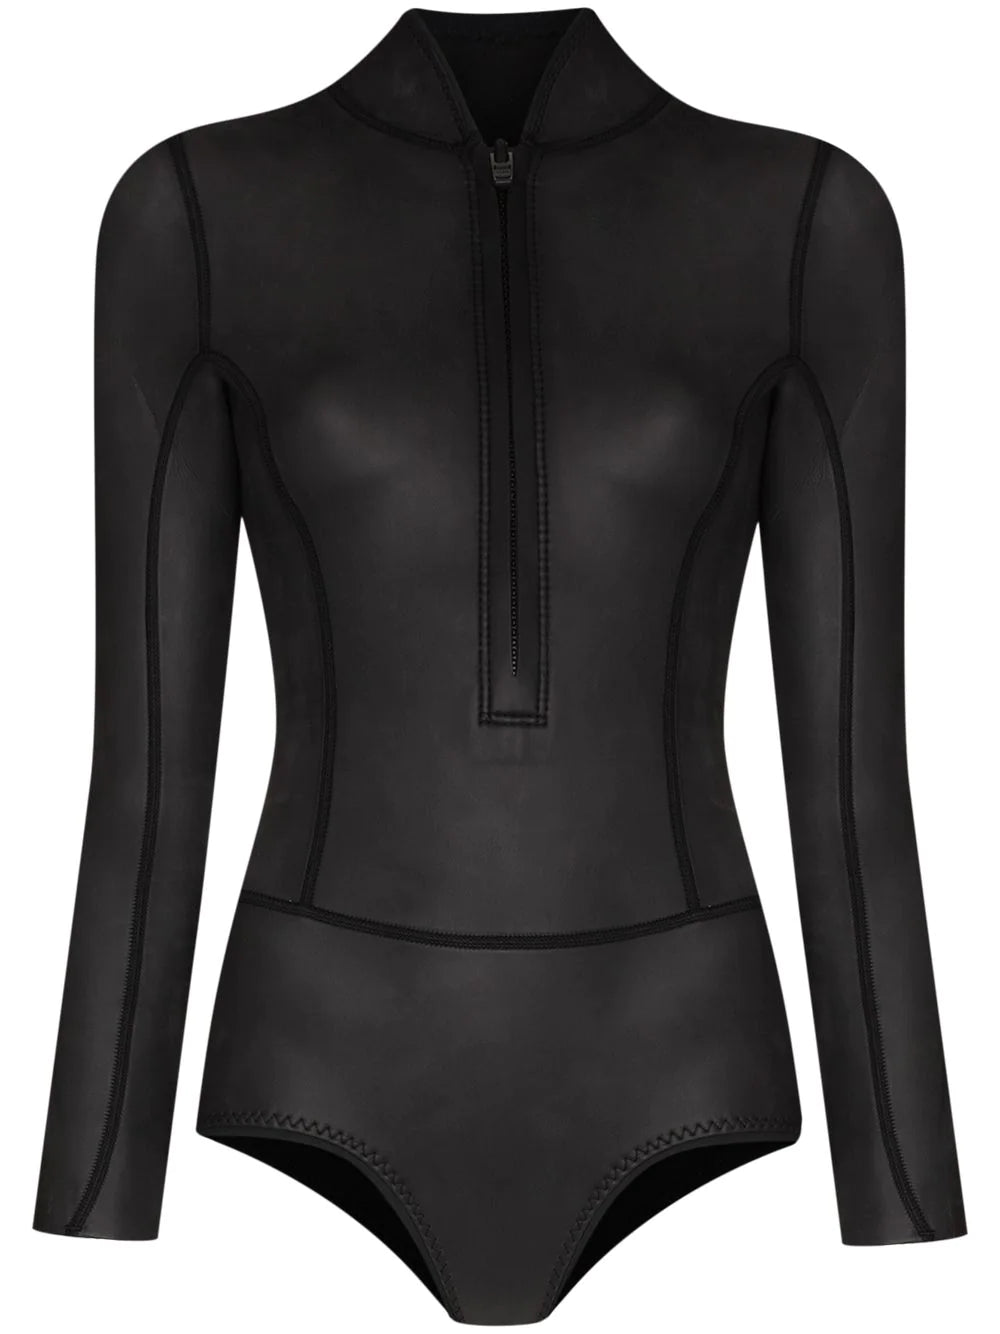 Lotte | Long Sleeve Spring Suit Black Smoothie - 2mm Eco Neoprene